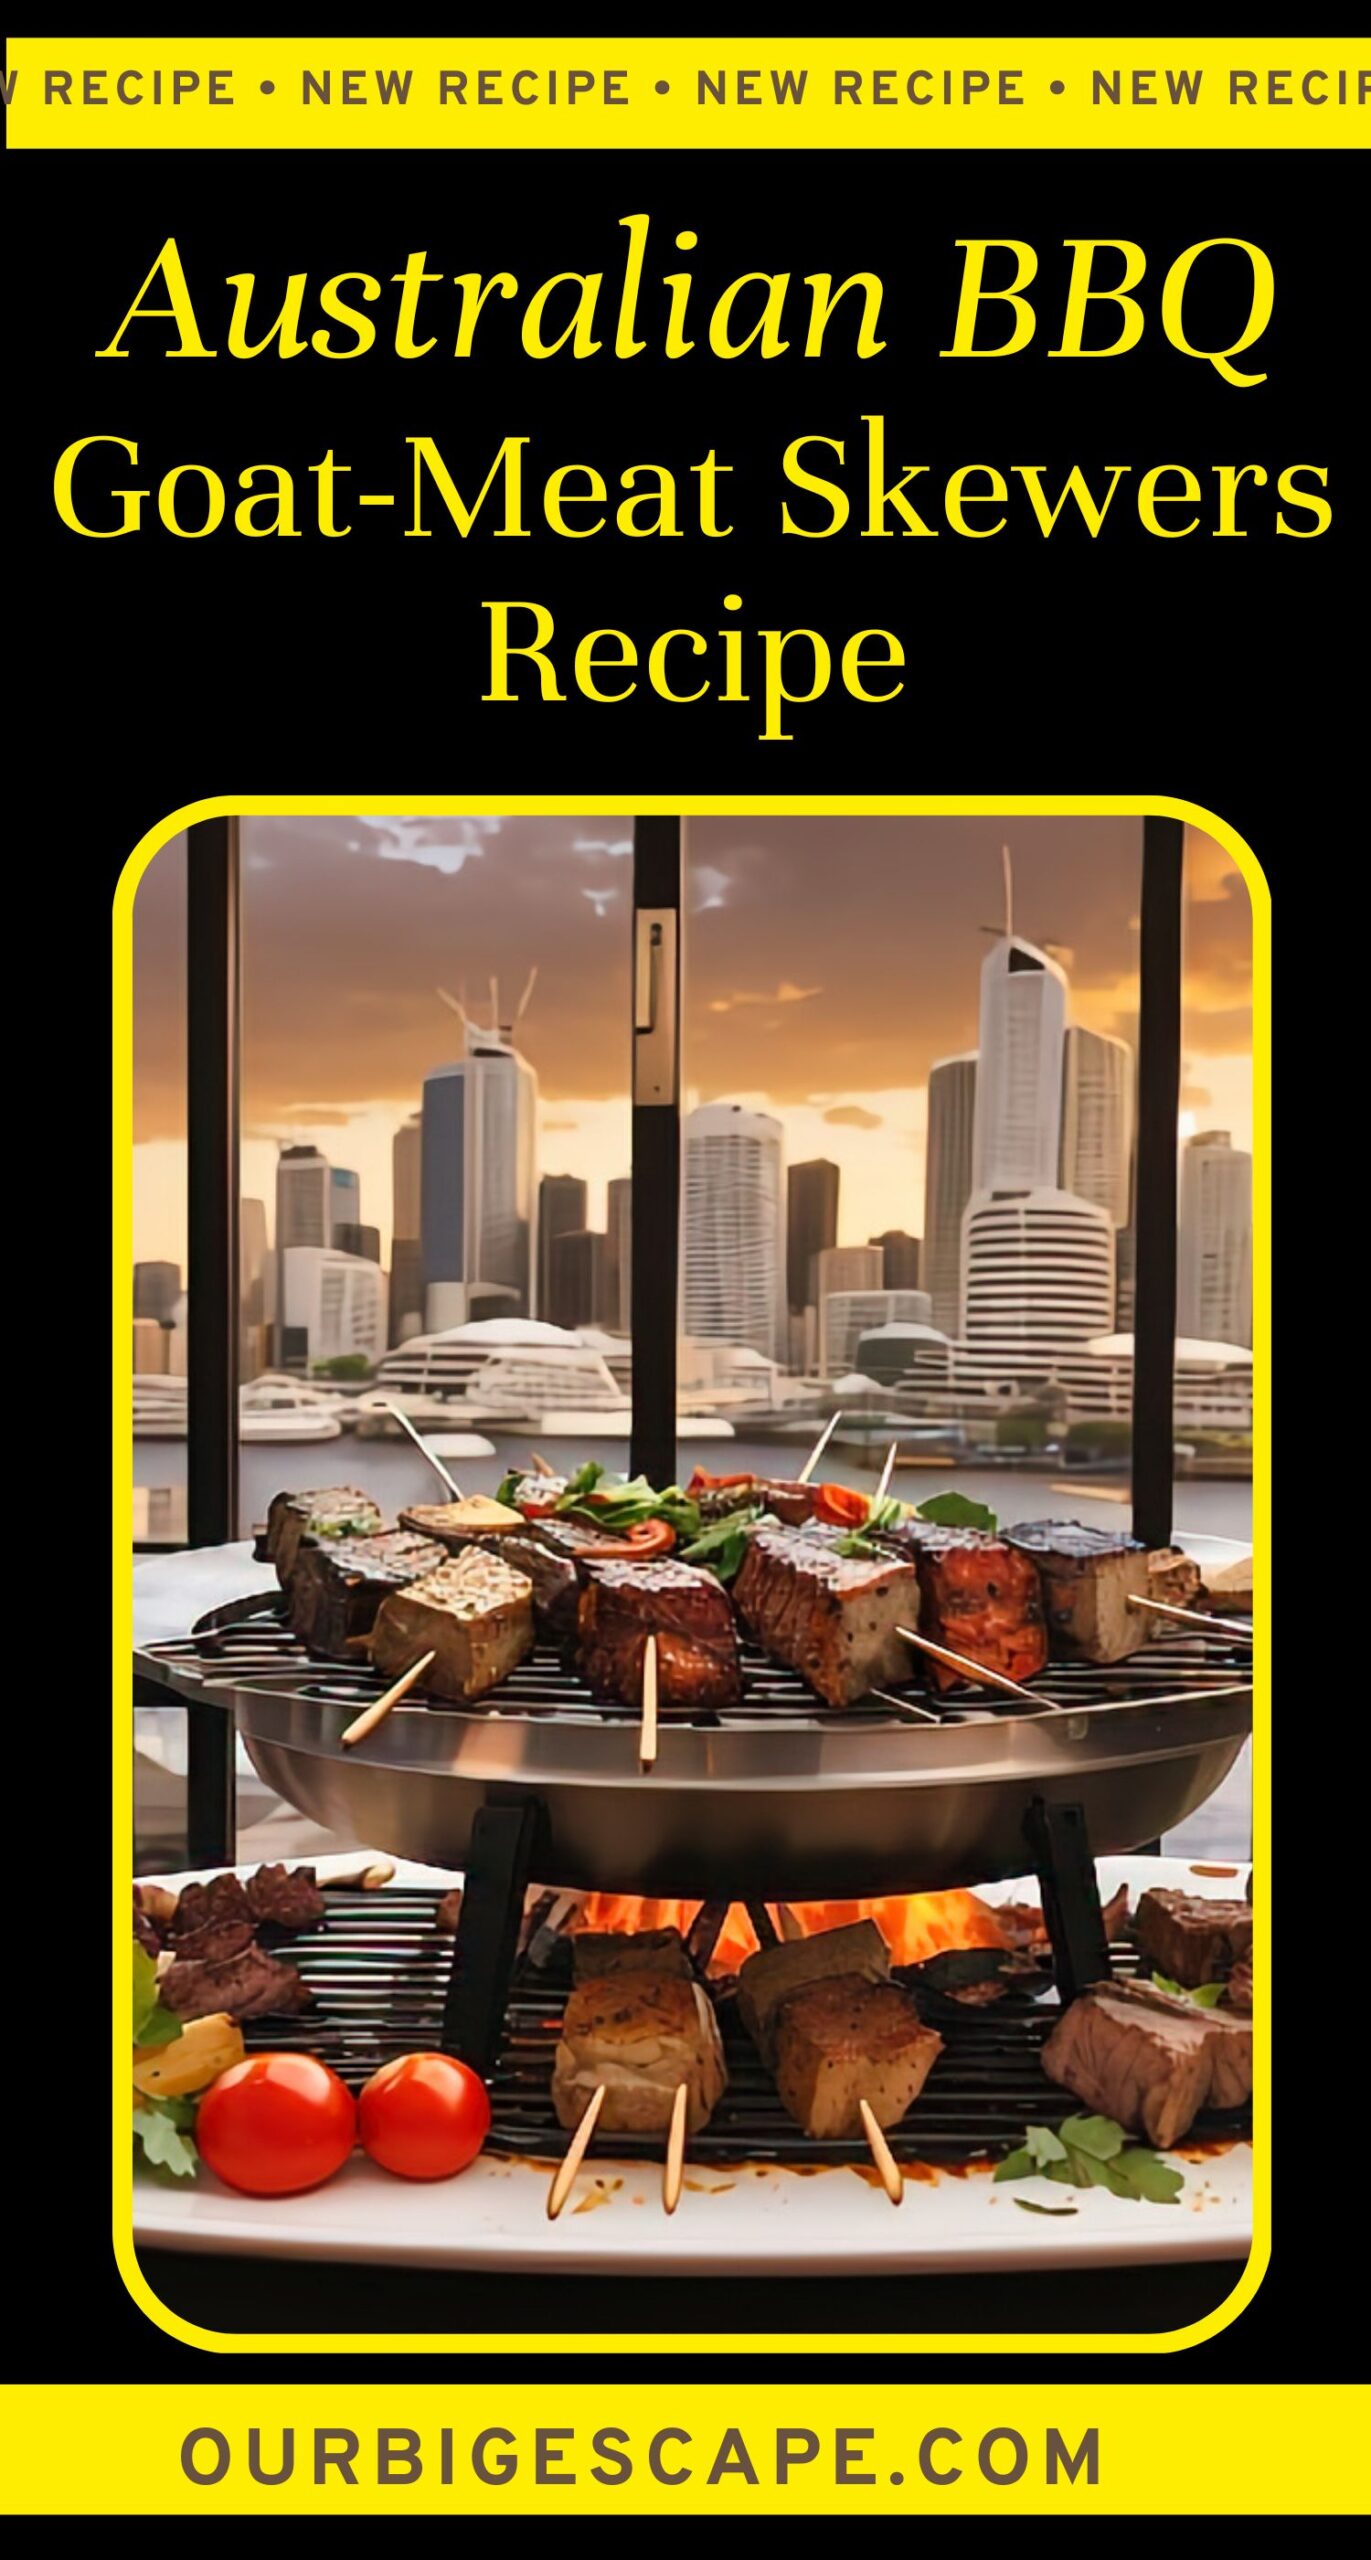 9. Australian Barbecued Goat-Meat Skewers Recipe (1)